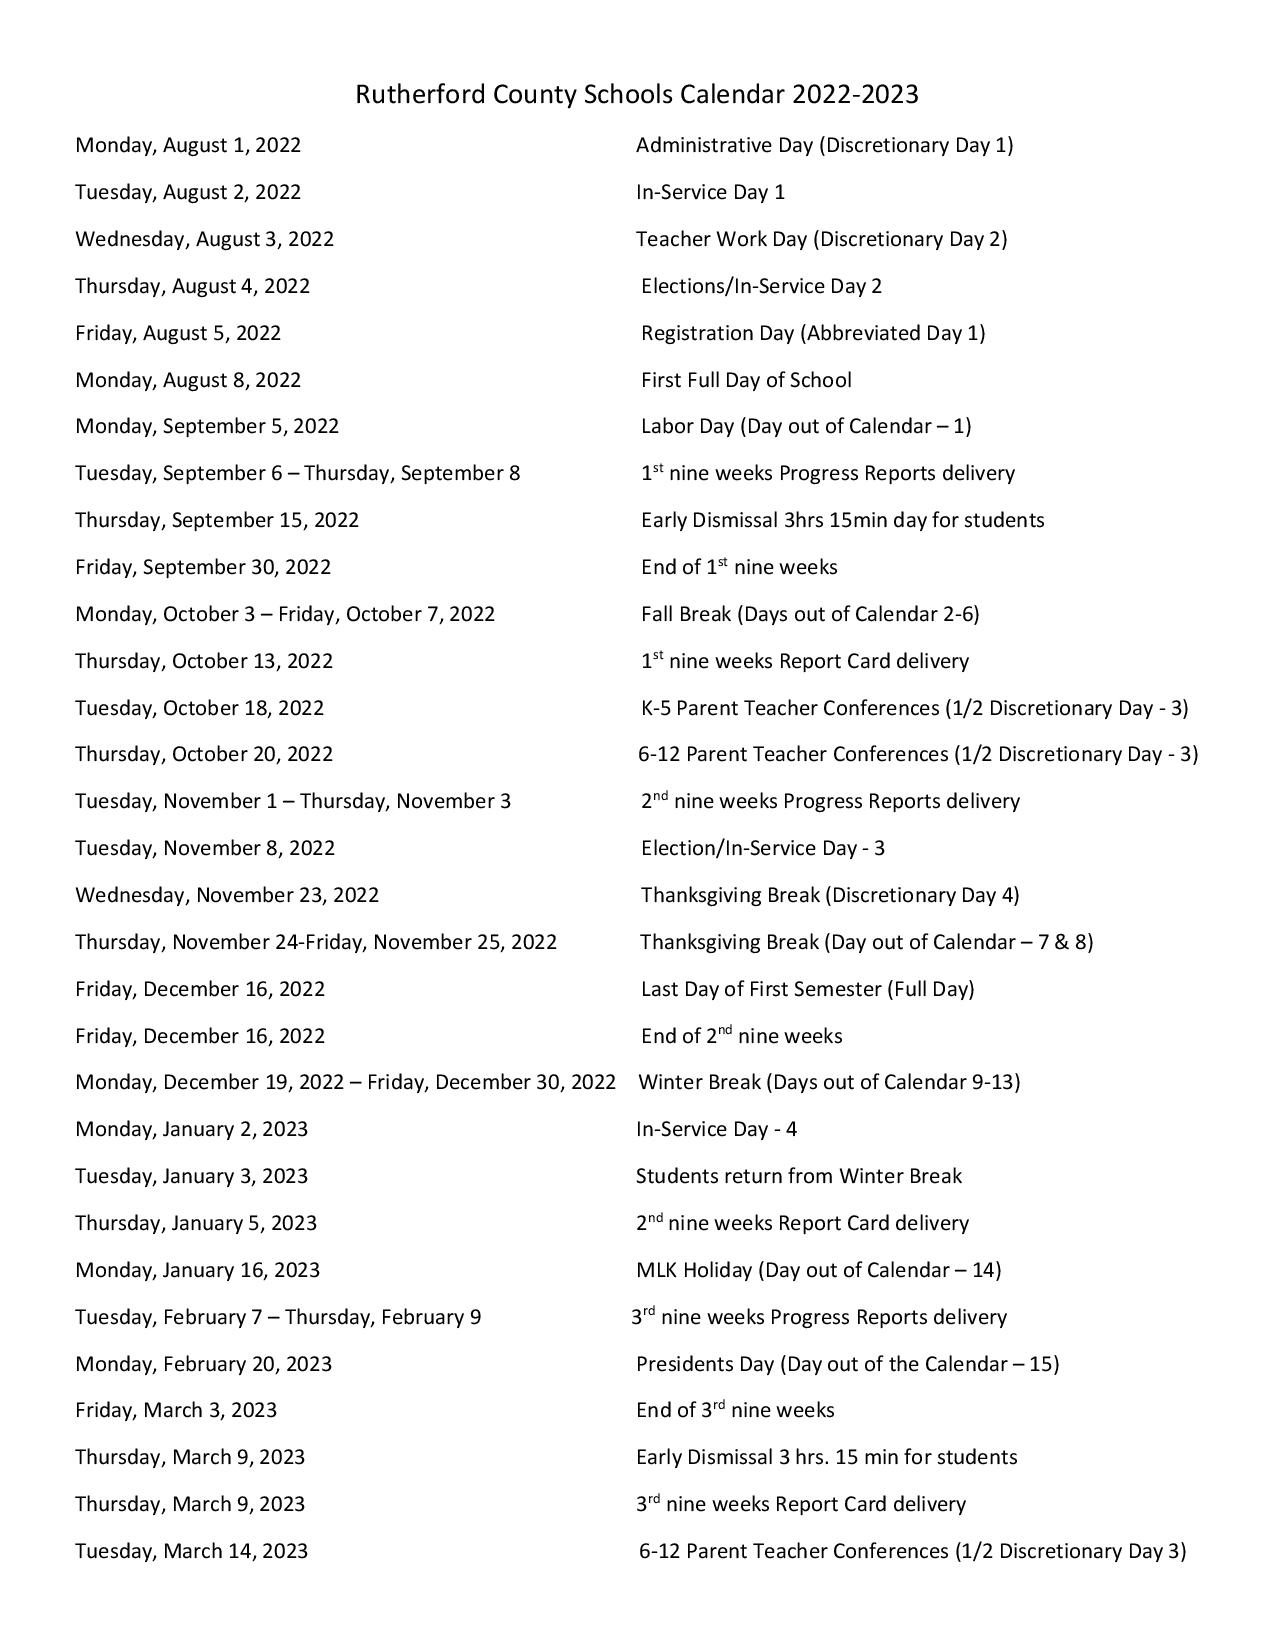 Rutherford County Schools Calendar Holidays 20222023 PDF